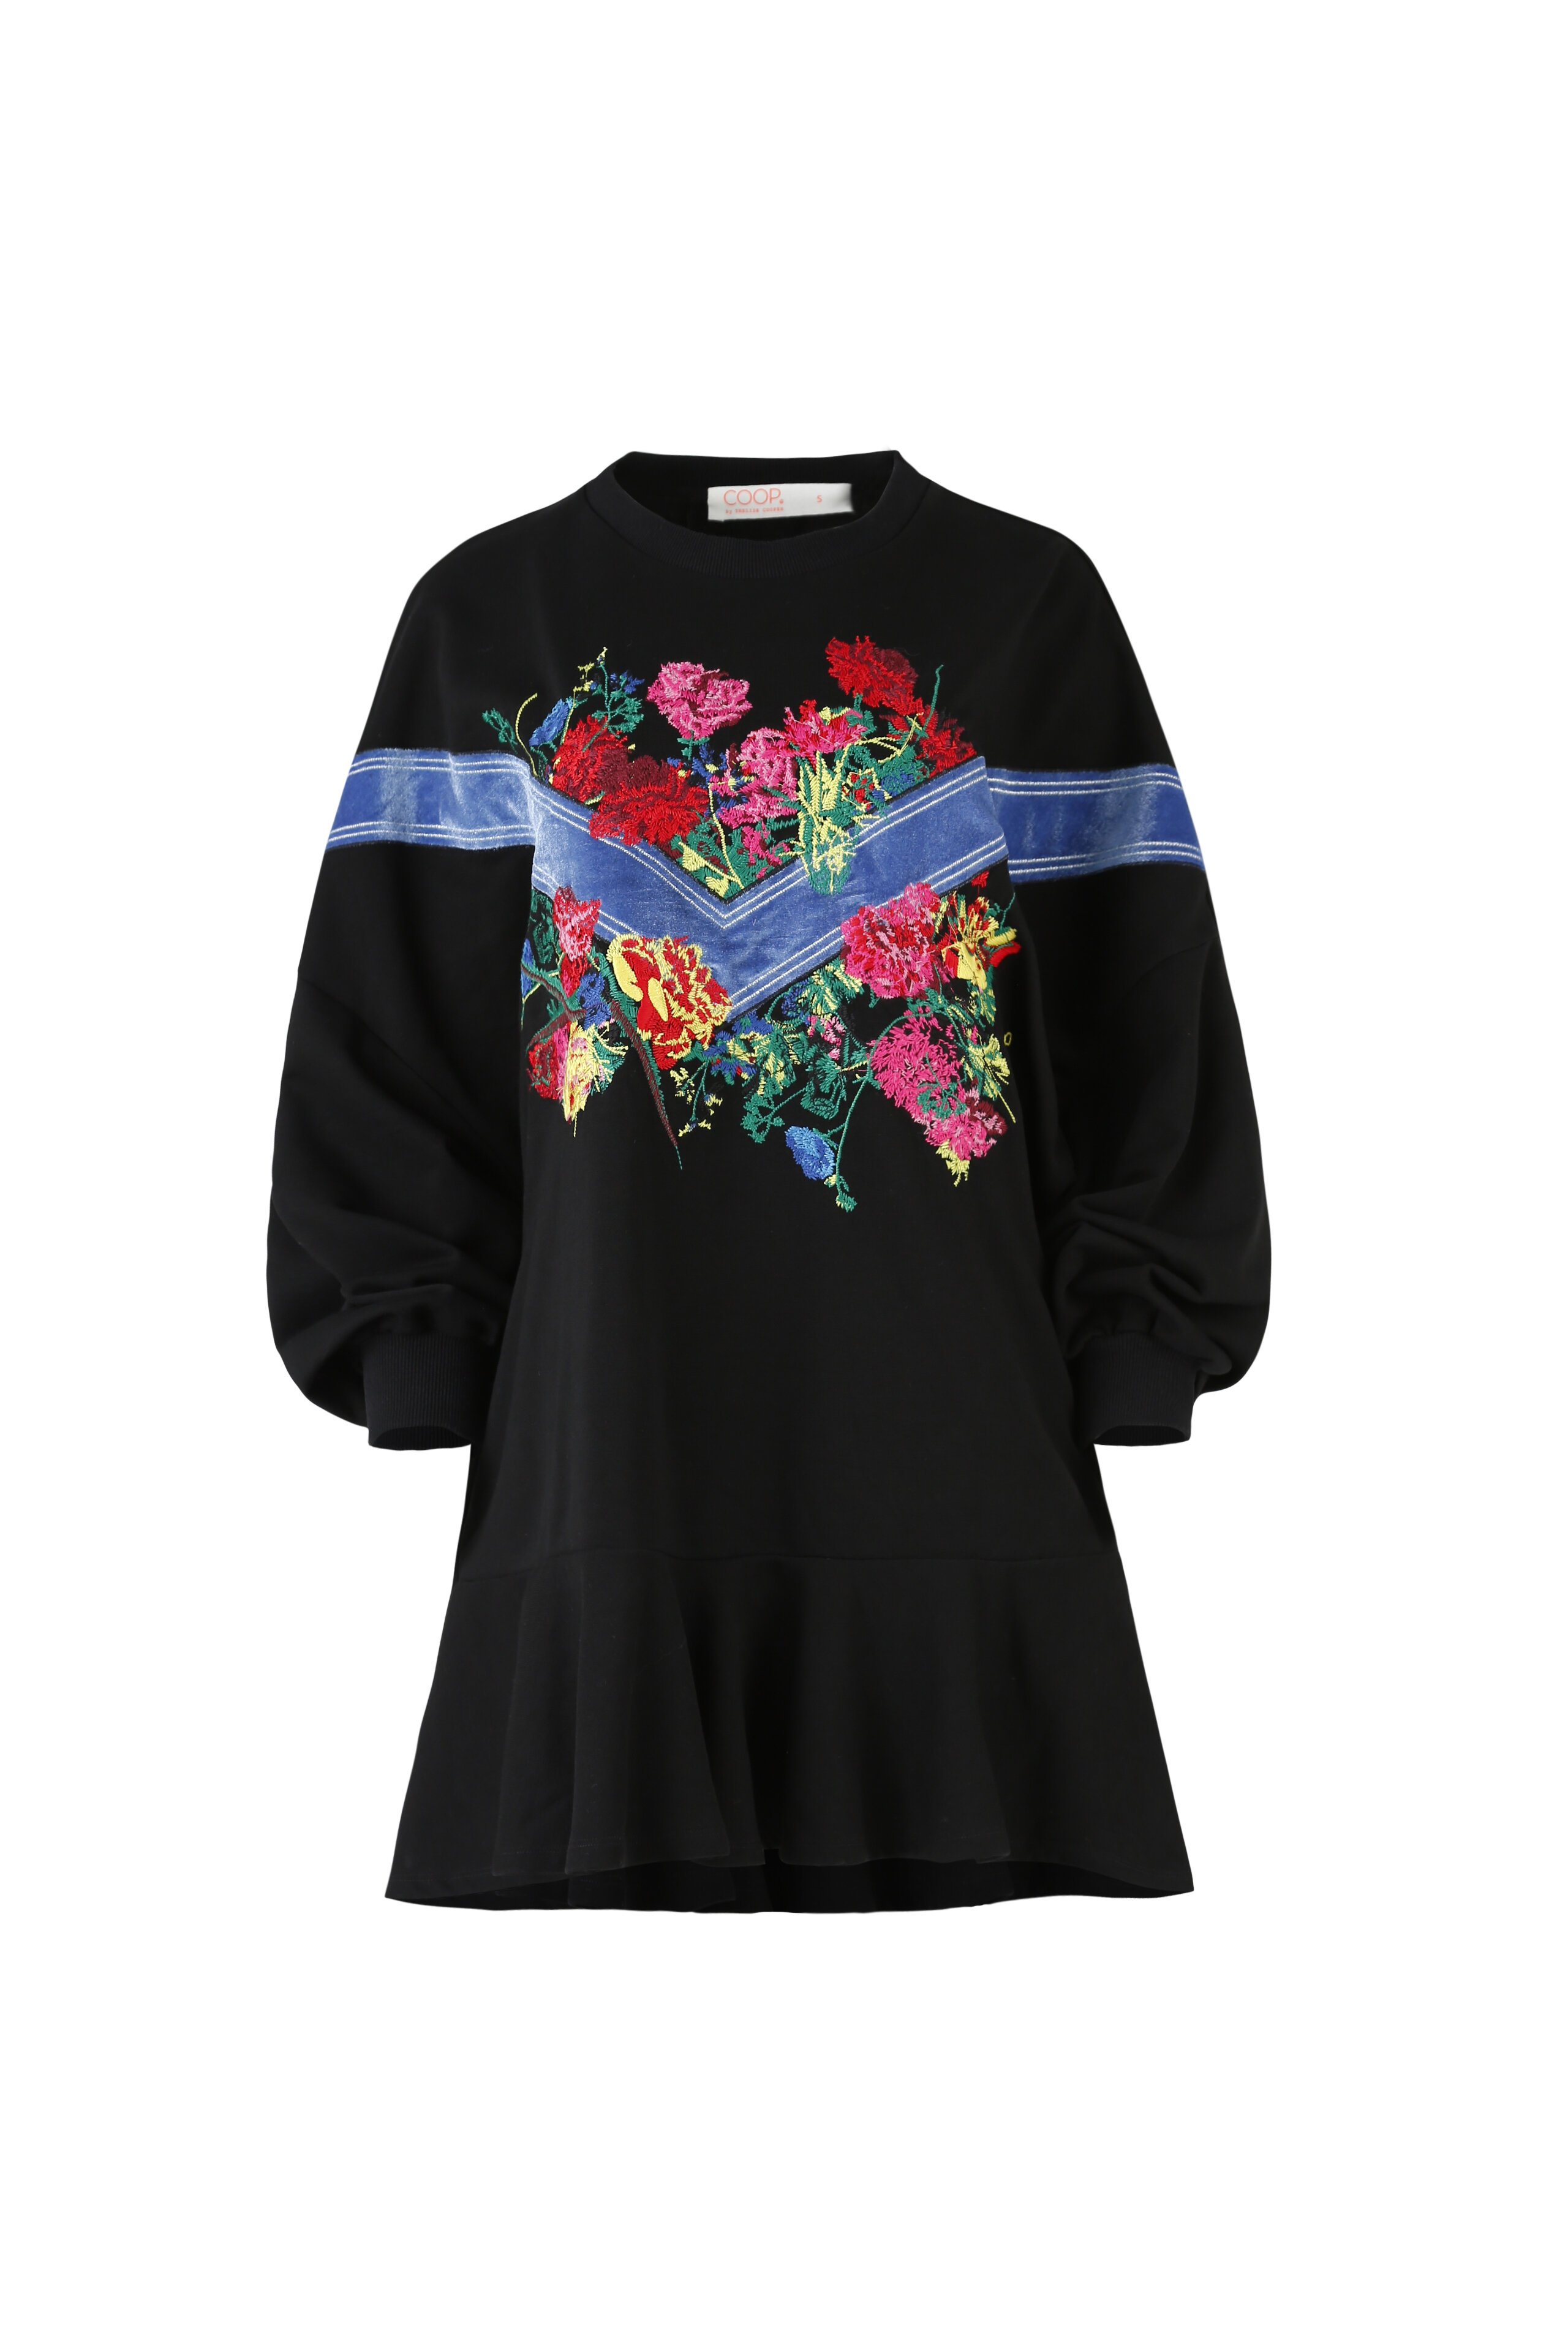 FLORAL DILEMMA Dress - Coop : Trelise Cooper Online - Sweater Days ...